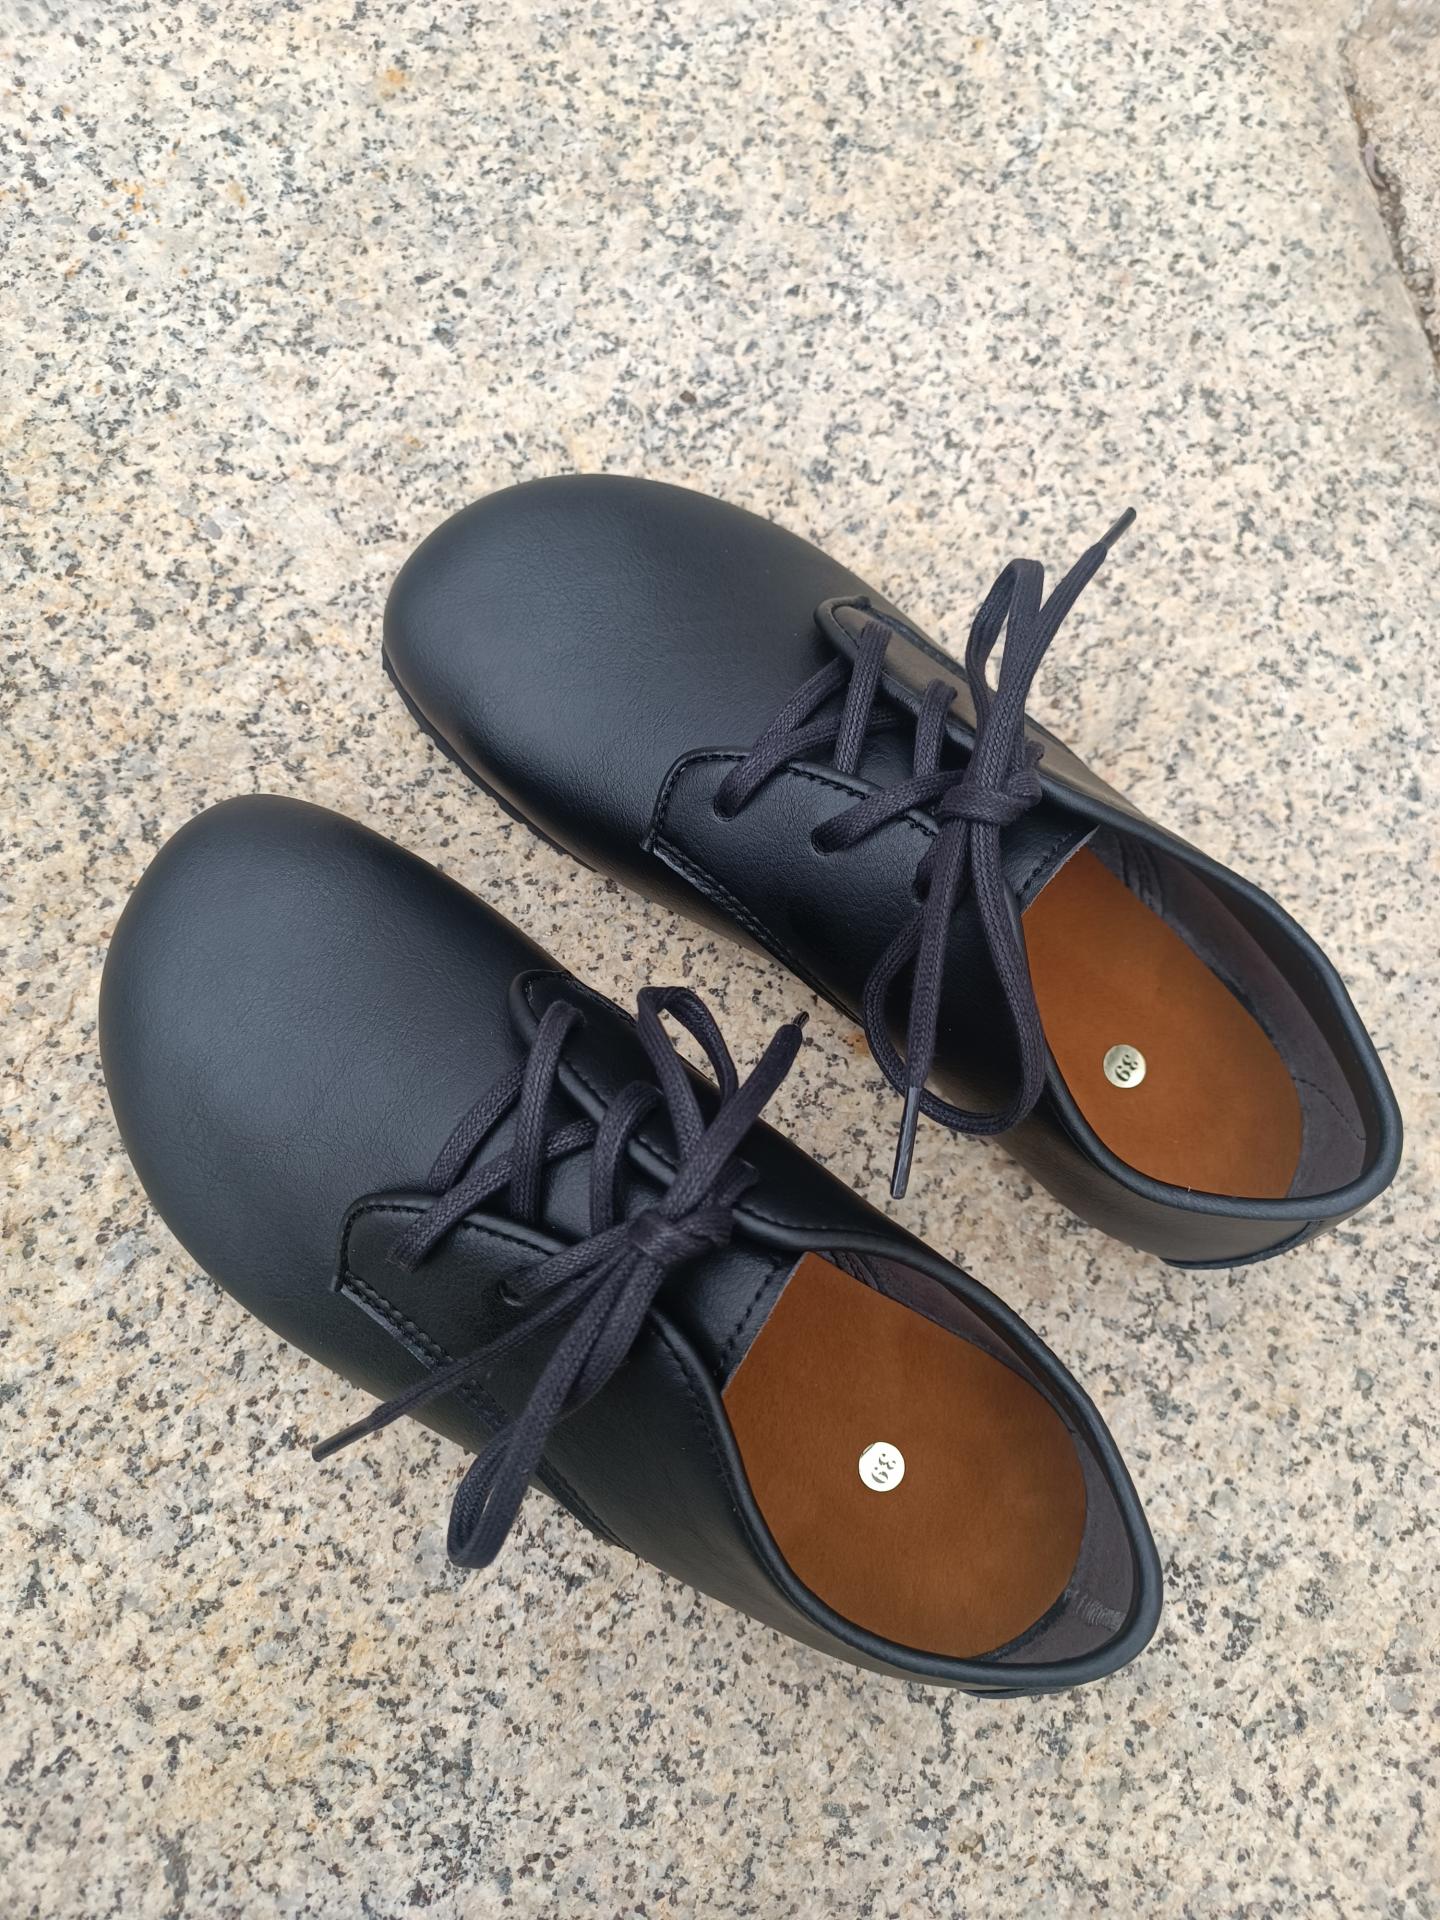 BAREFOOT AUSTIN color Negro, suelas Vibram SUPERNEWFLEX​ de 6mm de grosor, zapatos  Barefoot para mujer y hombre, calzado Barefoot, zapato veganos,  eco-friendly, barefoot.: 84,00 € - BIOWORLD SHOES